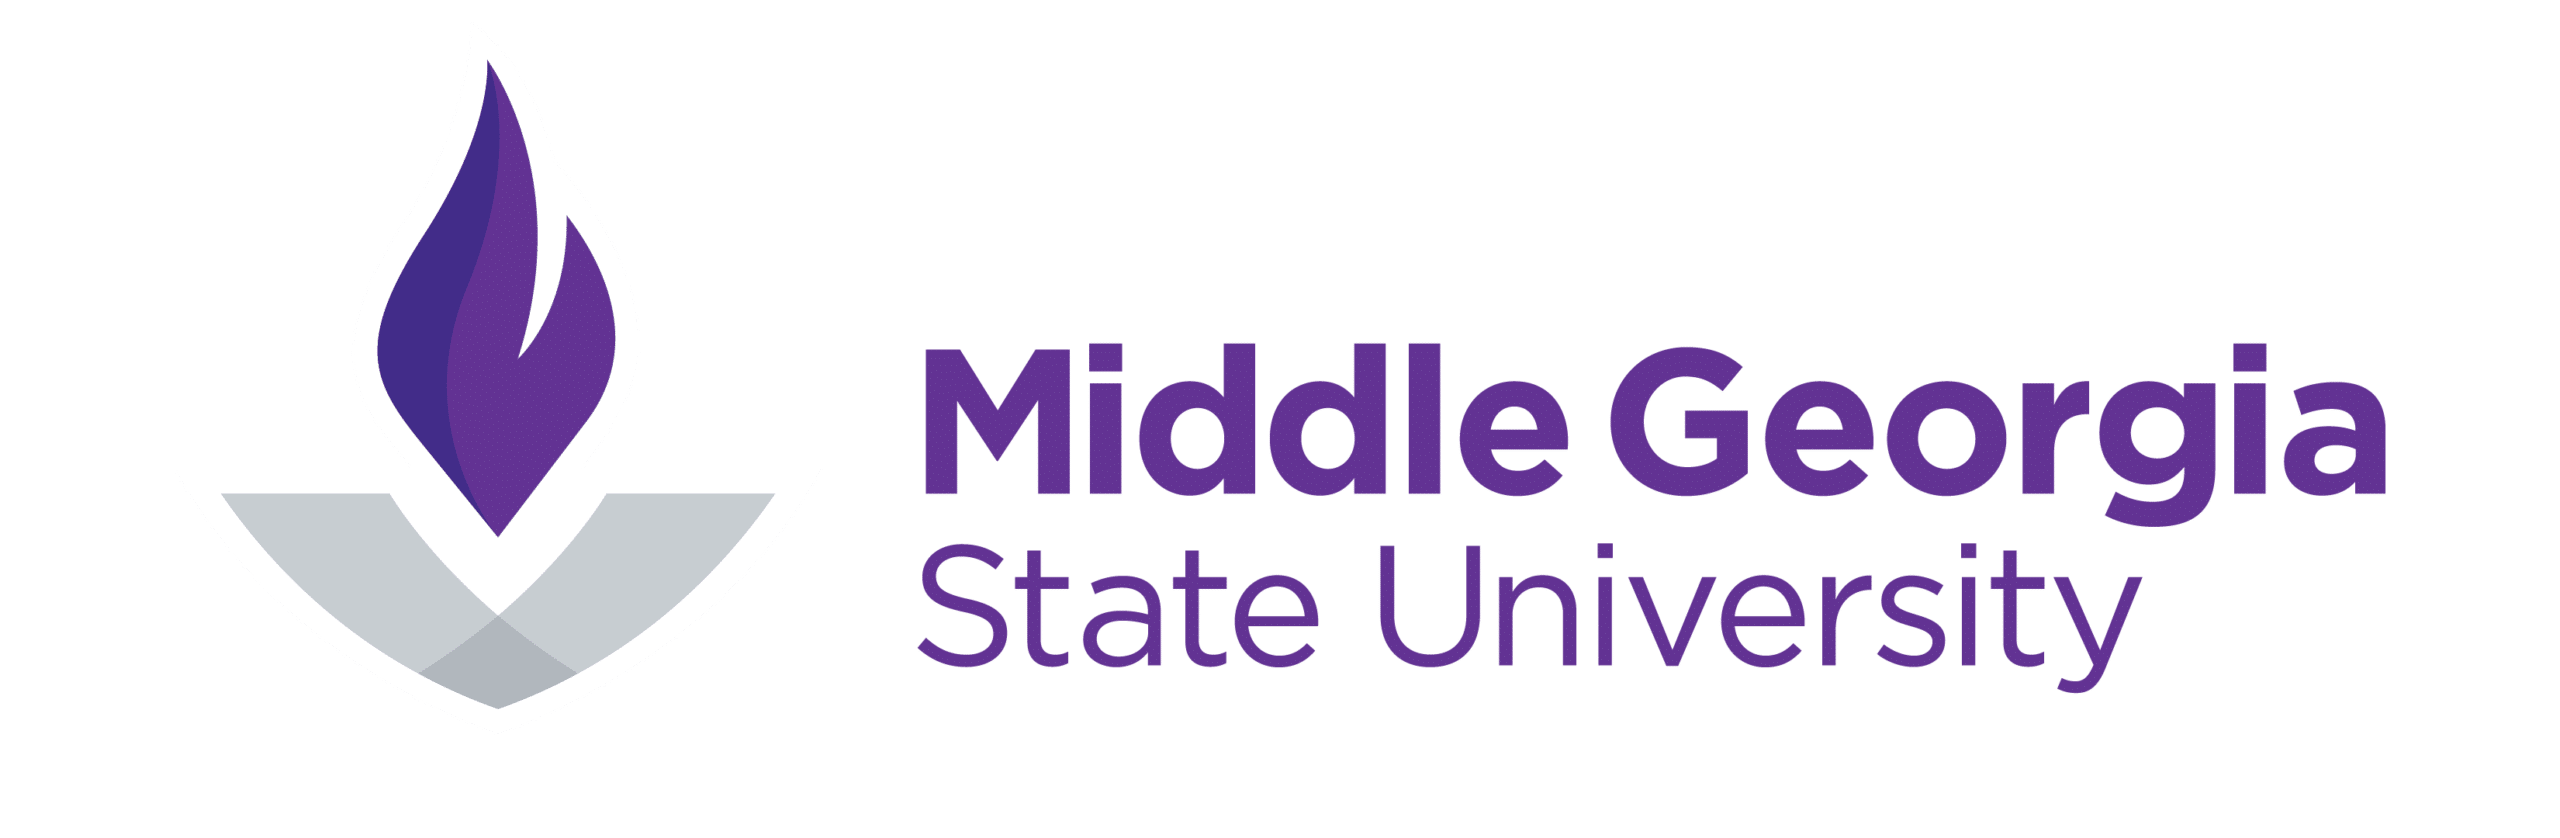 Middle Georgia State University 